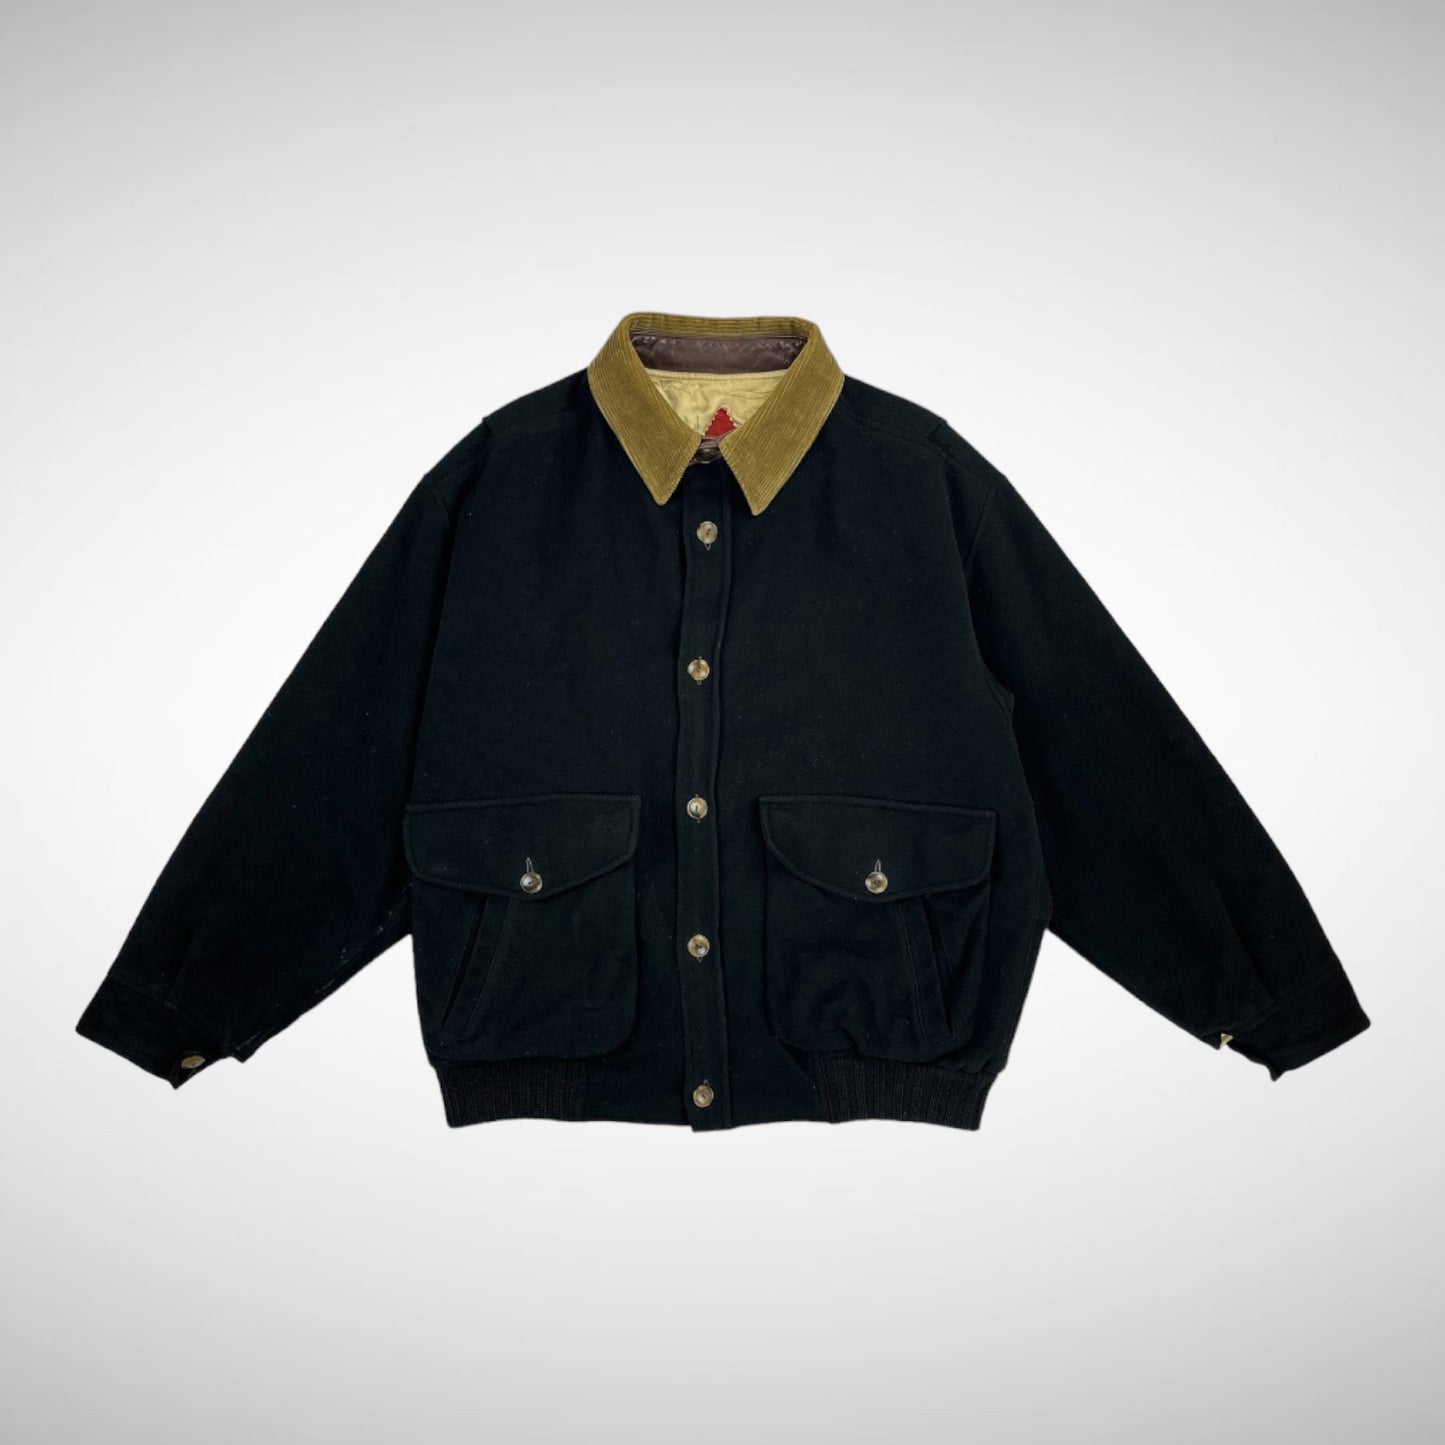 CP Company Wool Bomber Jacket (1980s)